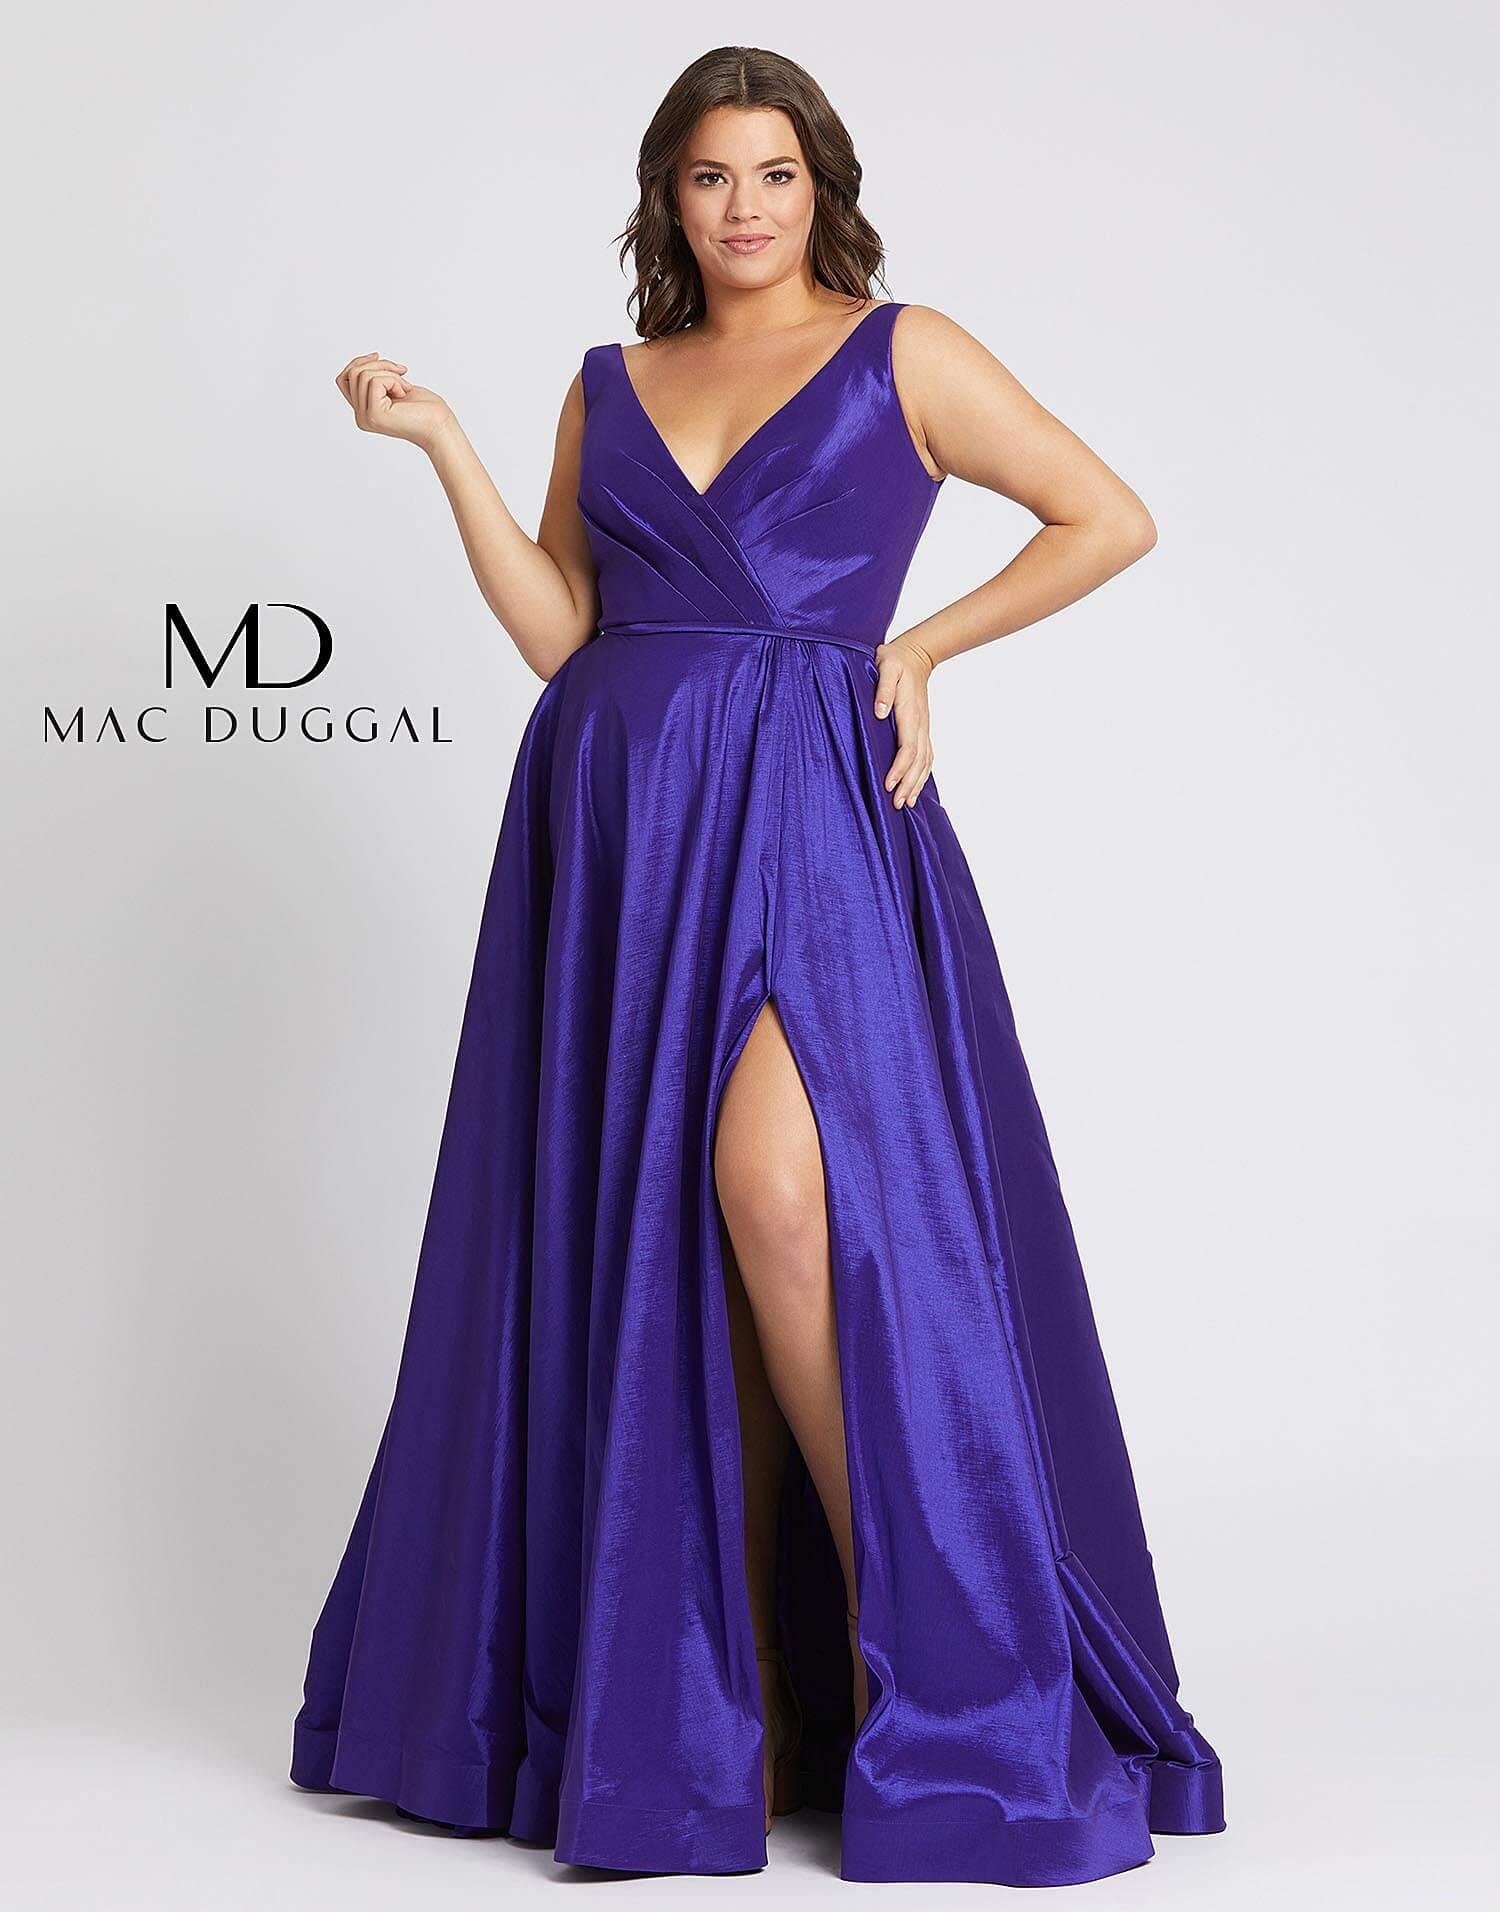 Mac Duggal Fabulouss Long Plus Size Prom Dress 67227F - The Dress Outlet Mac Duggal